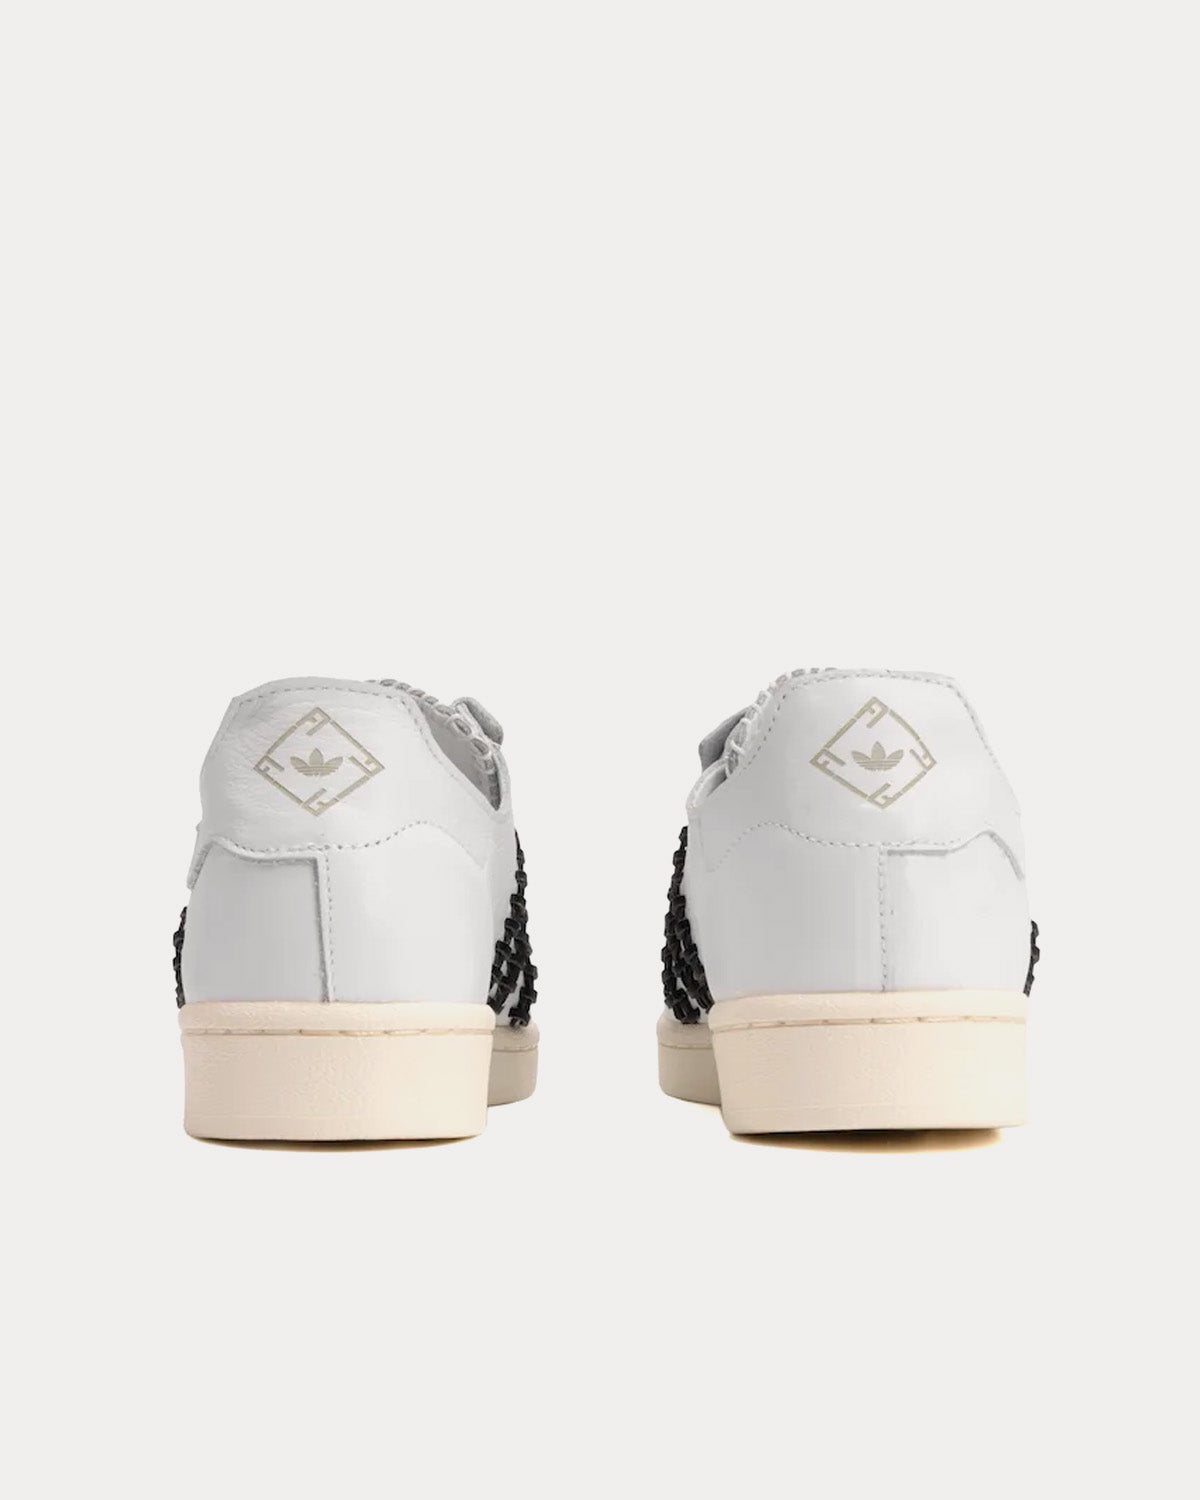 Adidas x Foot Industry - Superstar White / Black Low Top Sneakers